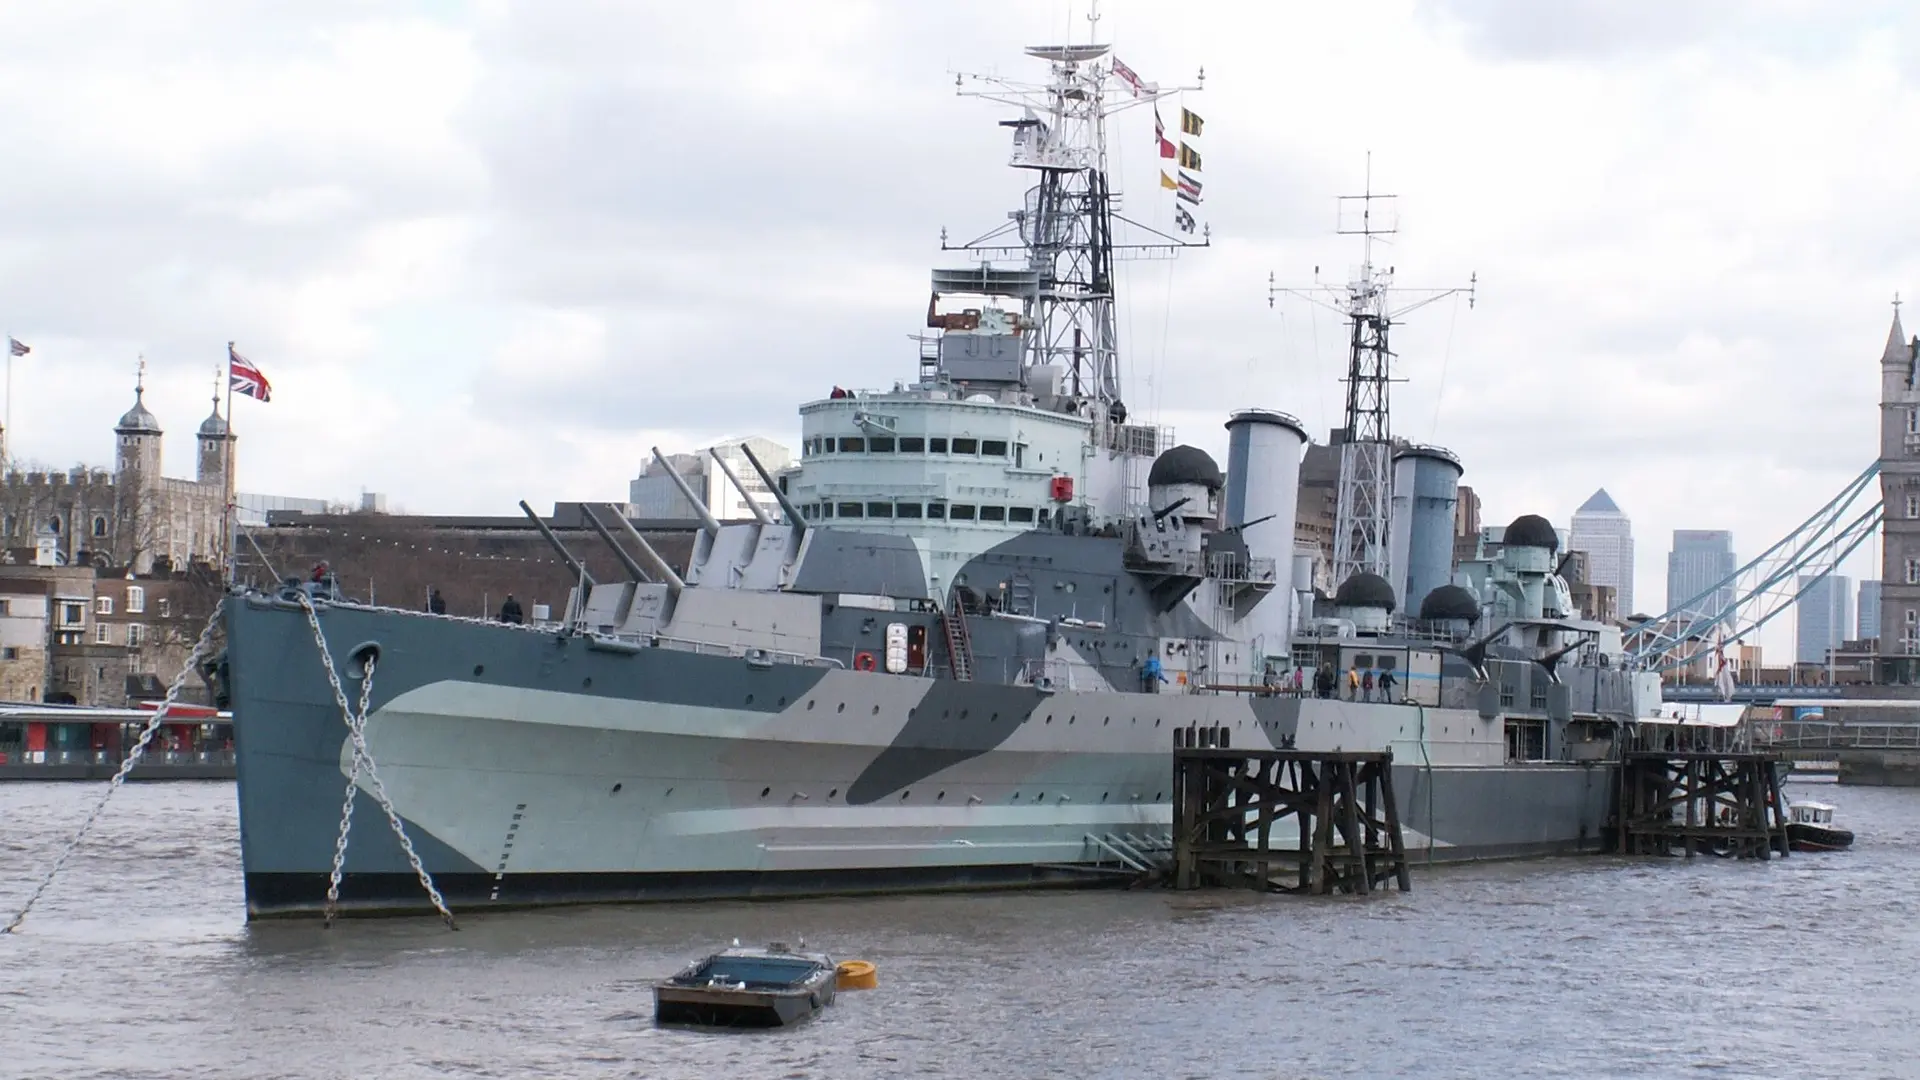 HMS Belfast in the mornining 